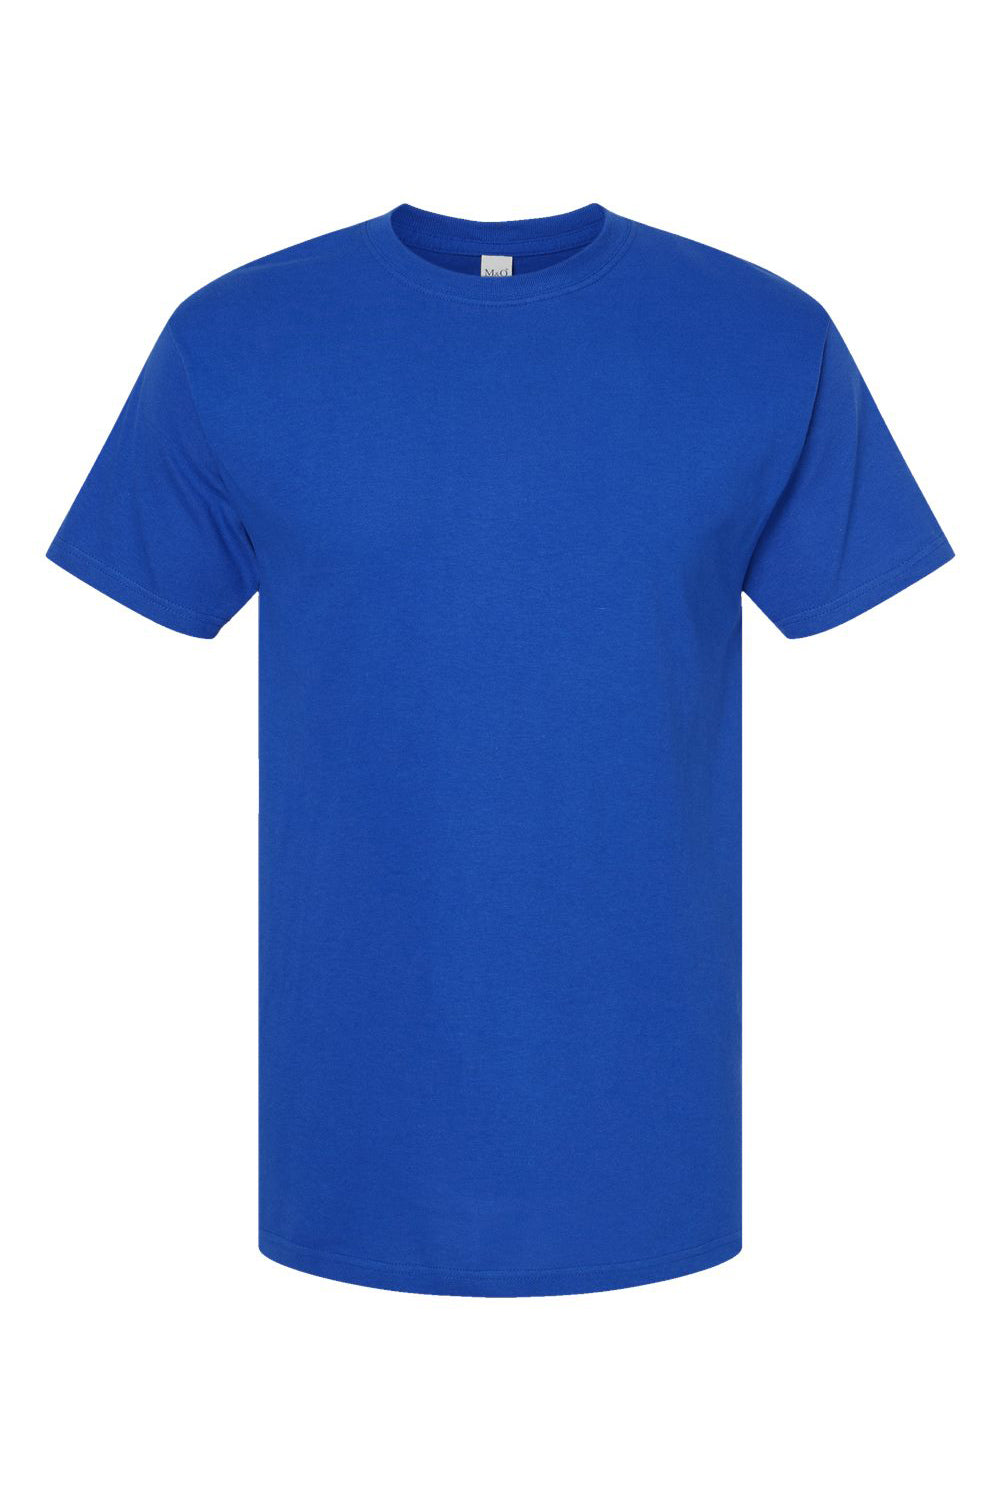 M&O 4800 Mens Gold Soft Touch Short Sleeve Crewneck T-Shirt Royal Blue Flat Front